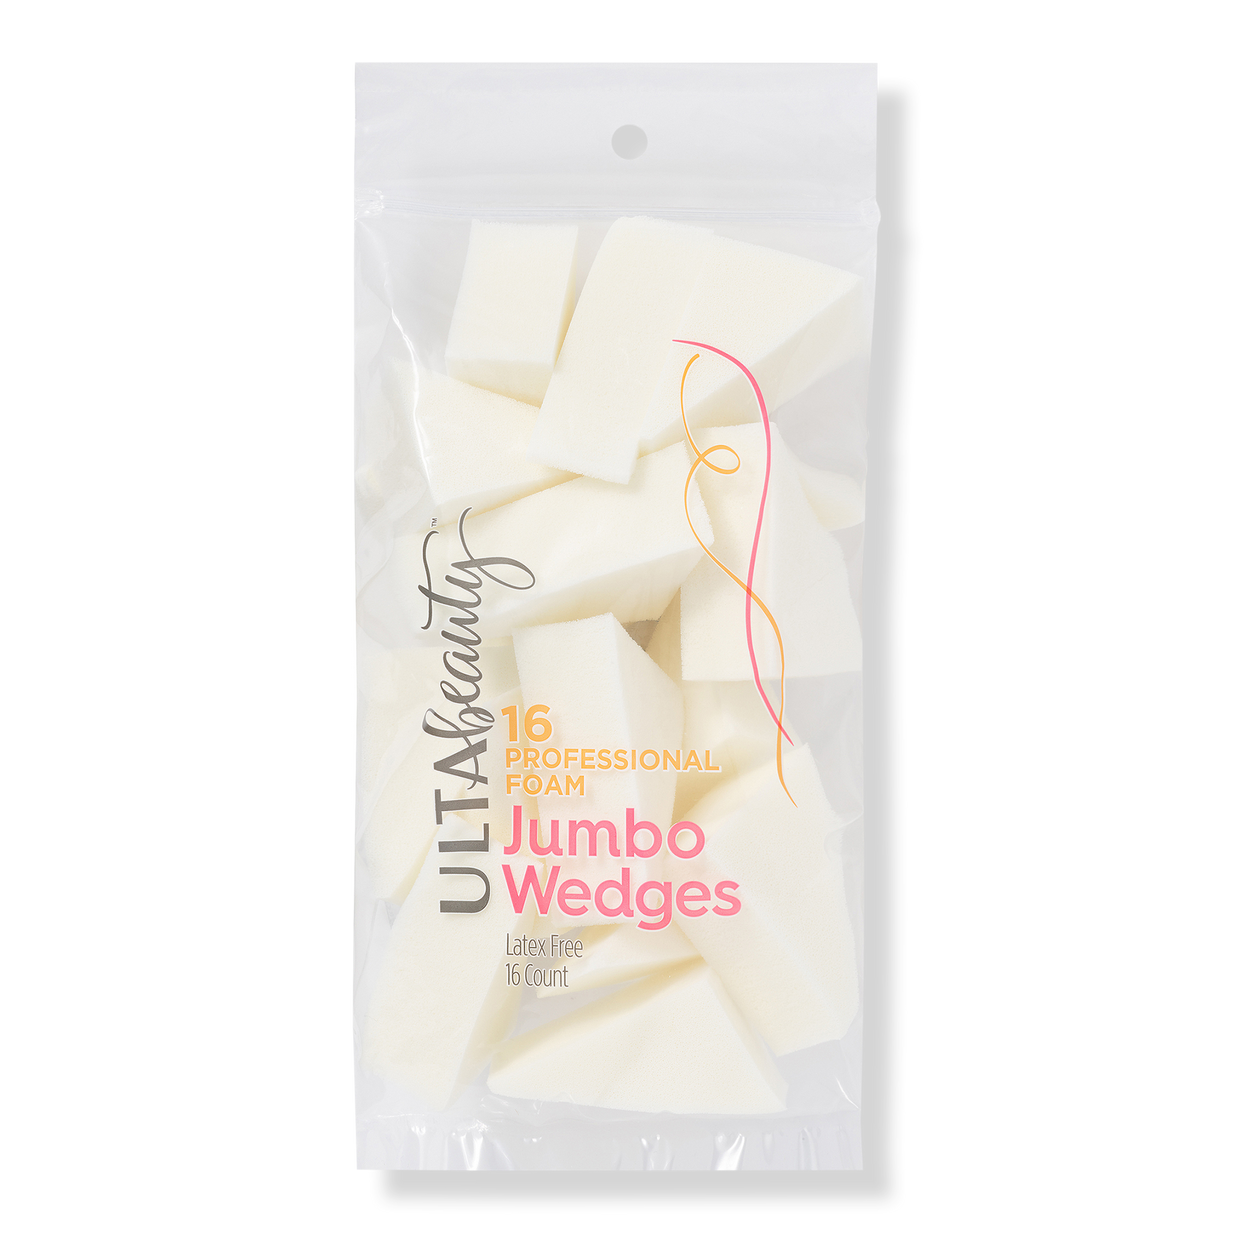 Professional Foam Jumbo Wedges - ULTA Beauty Collection